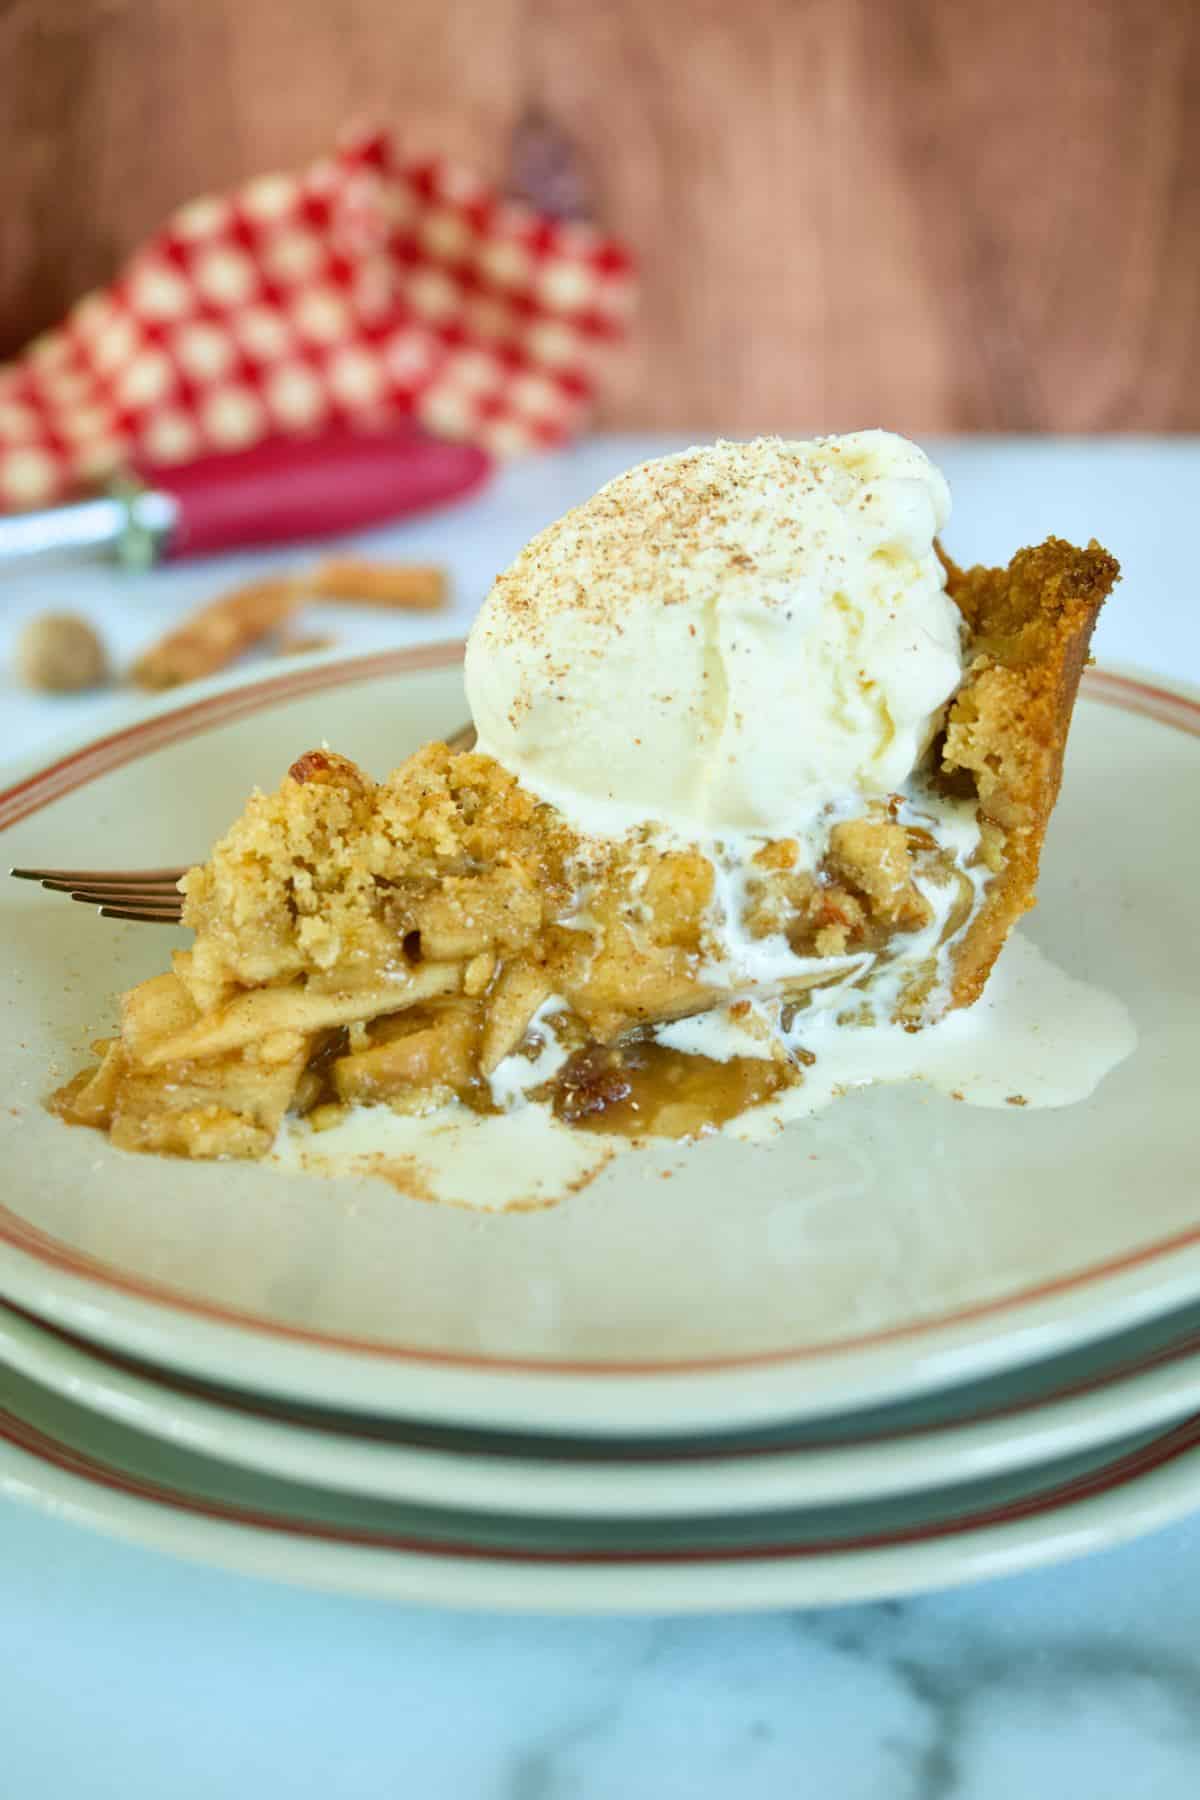 Slice of gluten free apple pie topped with vanilla ice cream.